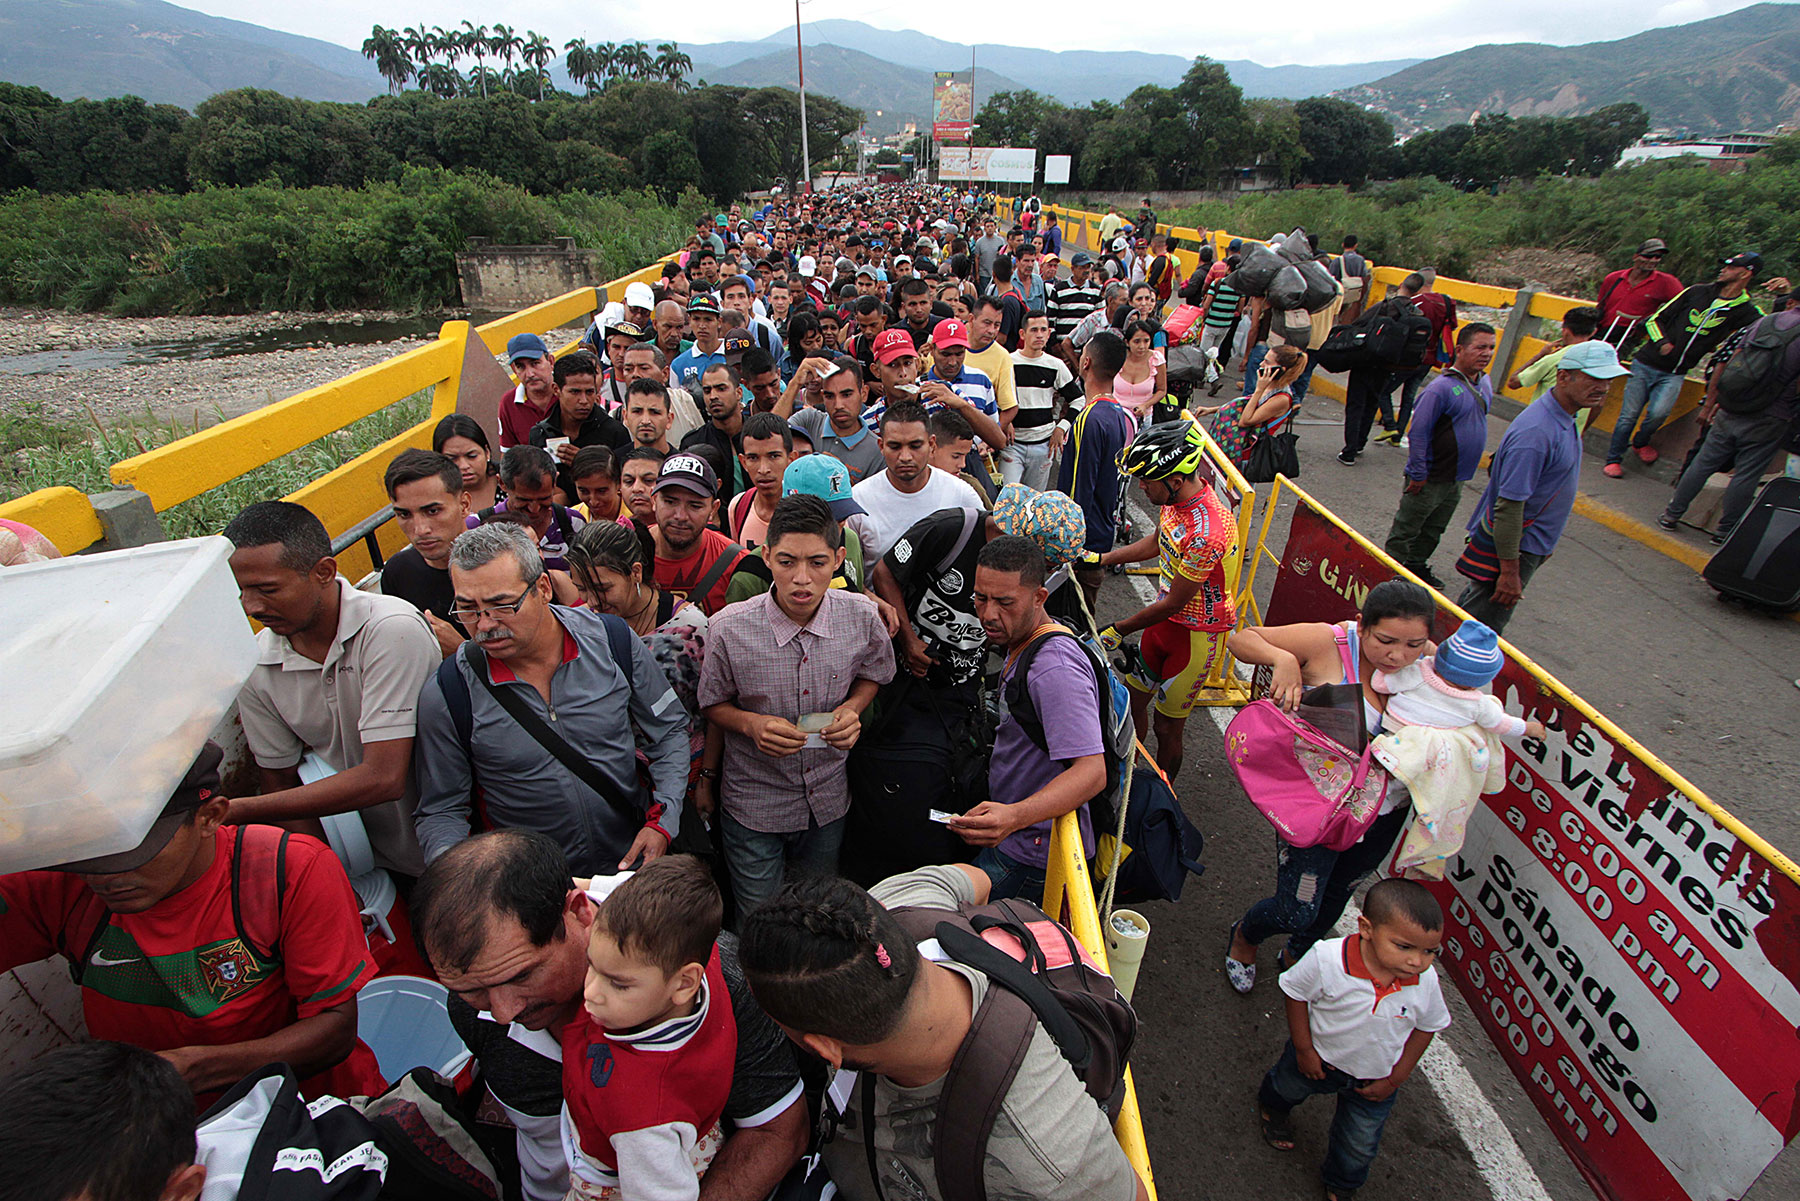 Venezuela Migration Crowd On Bridge 